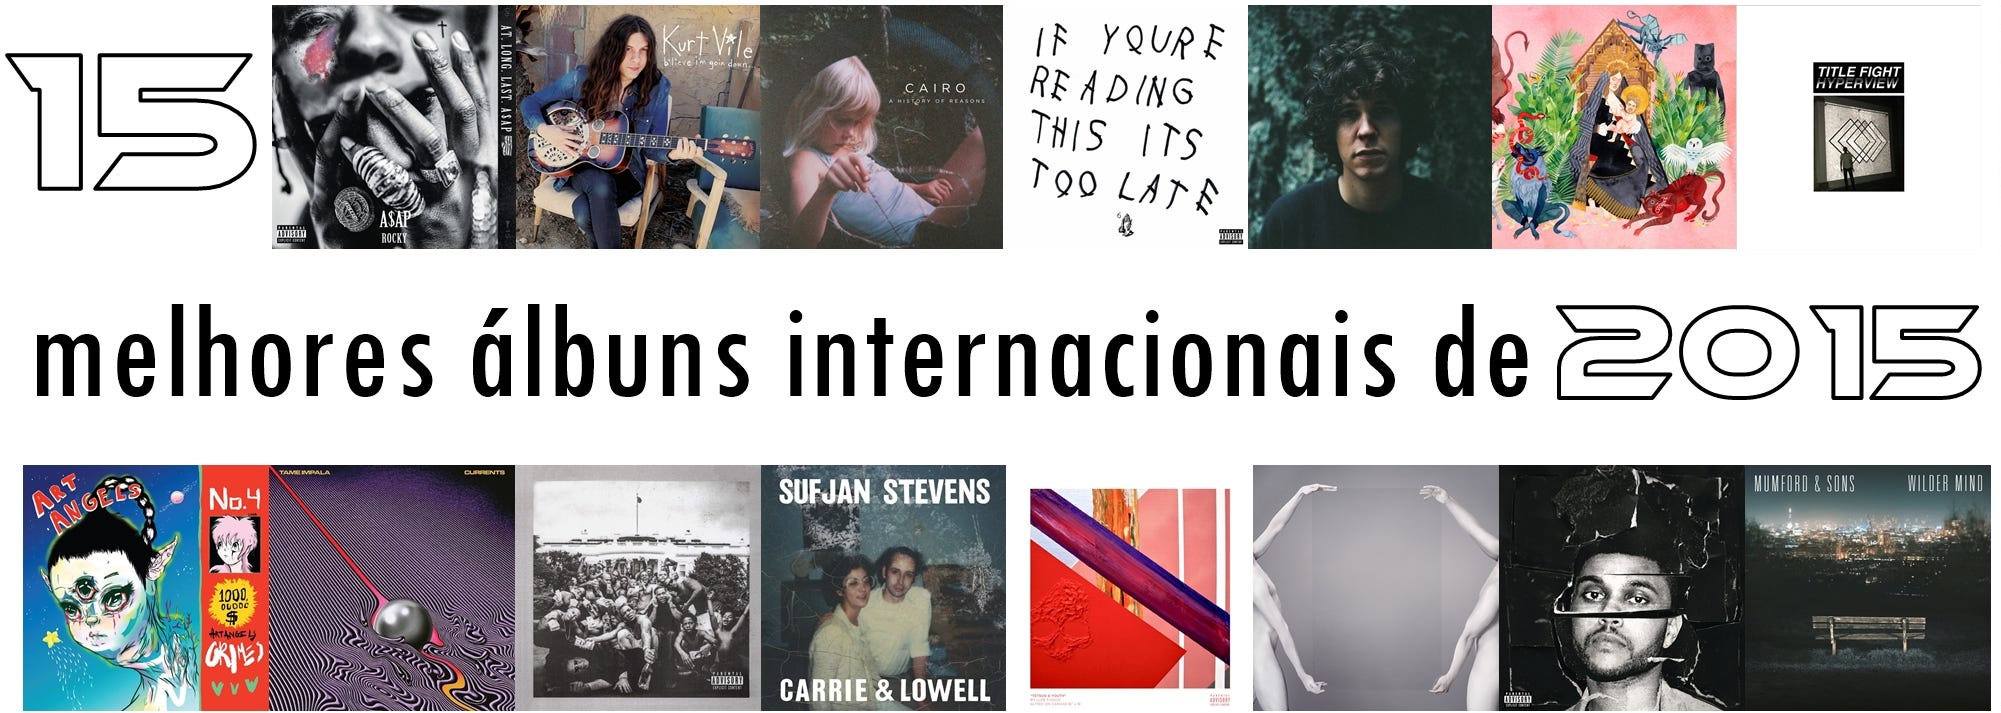 15 melhores álbuns internacionais de 2015 | by interfectoris | Medium